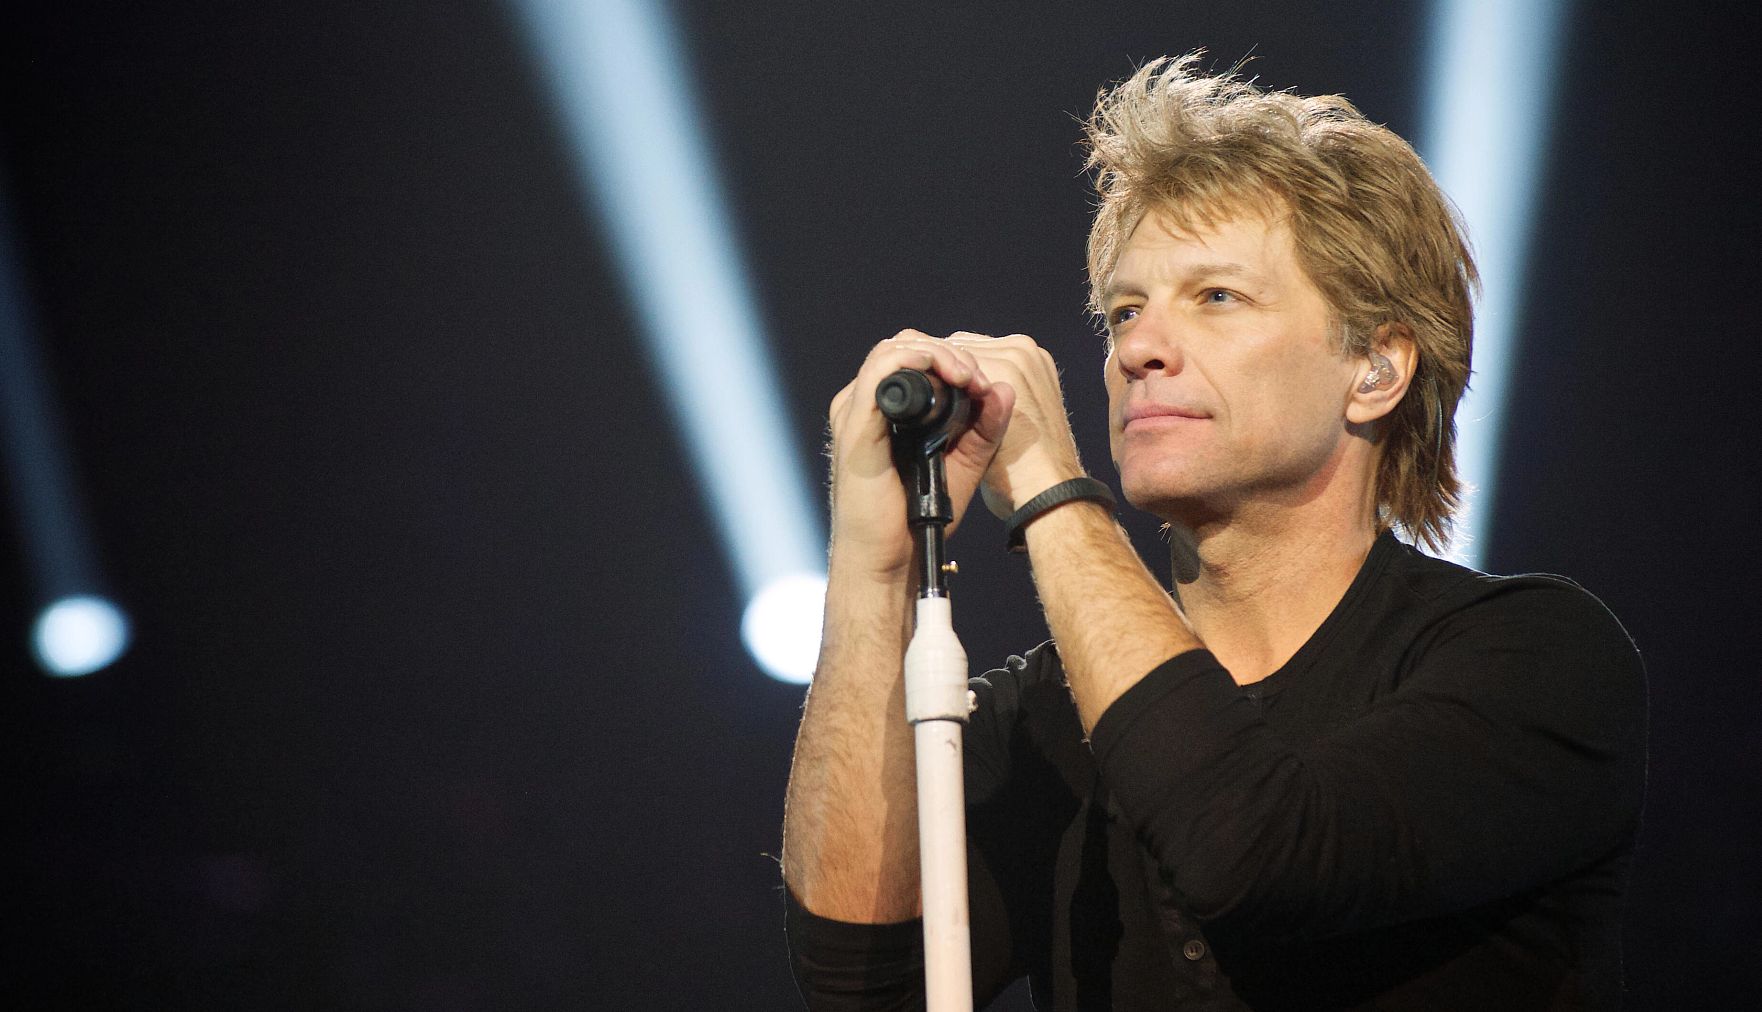 Jon Bon Jovi performing at the Mohegan Sun in Uncasville, Connecticut